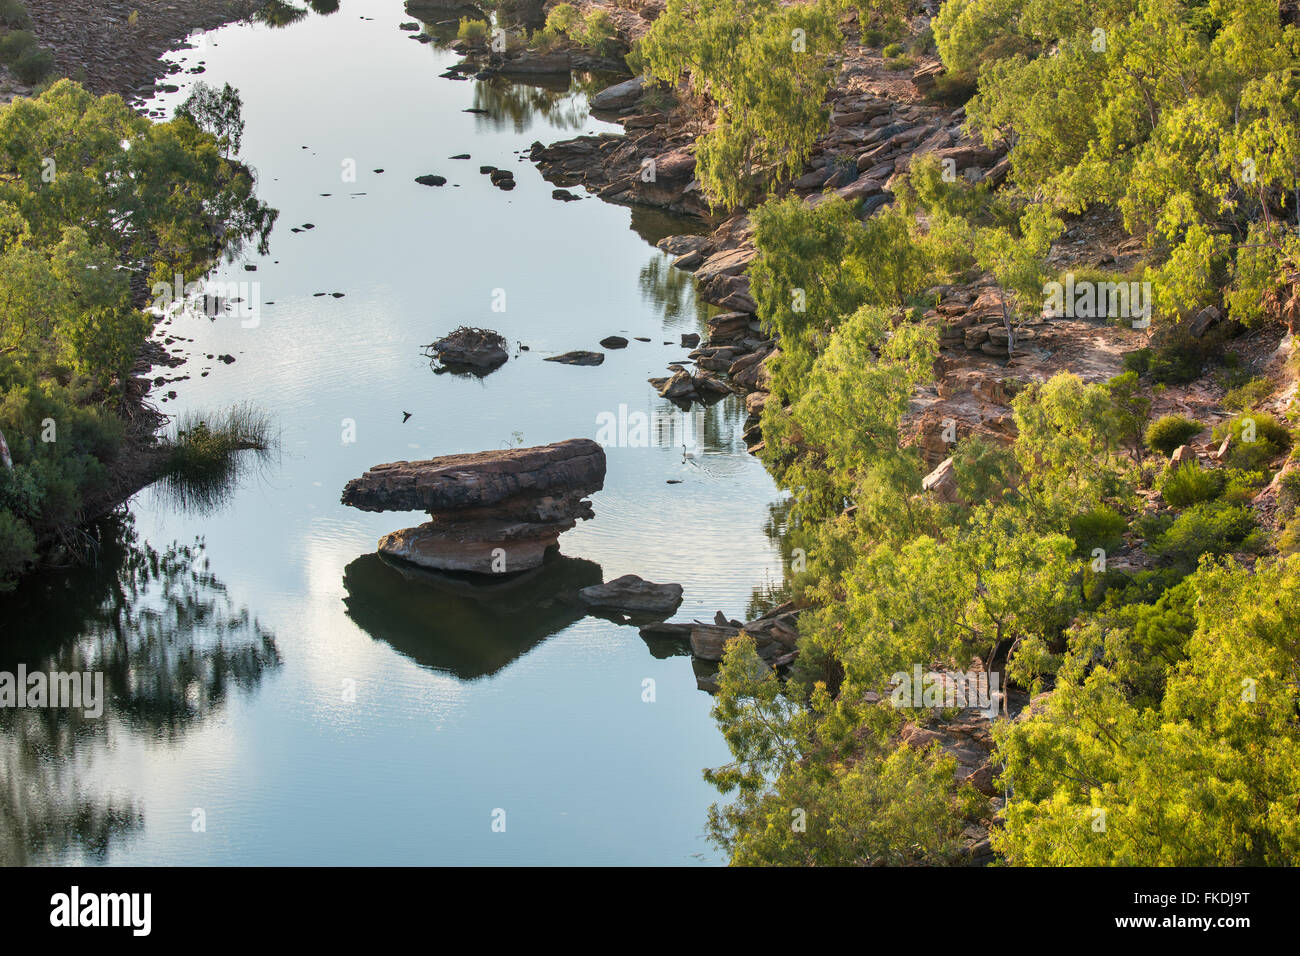 the Hawk's Head lookout over the Murchison River gorge, Kalbarri National Park, Western Australia Stock Photo